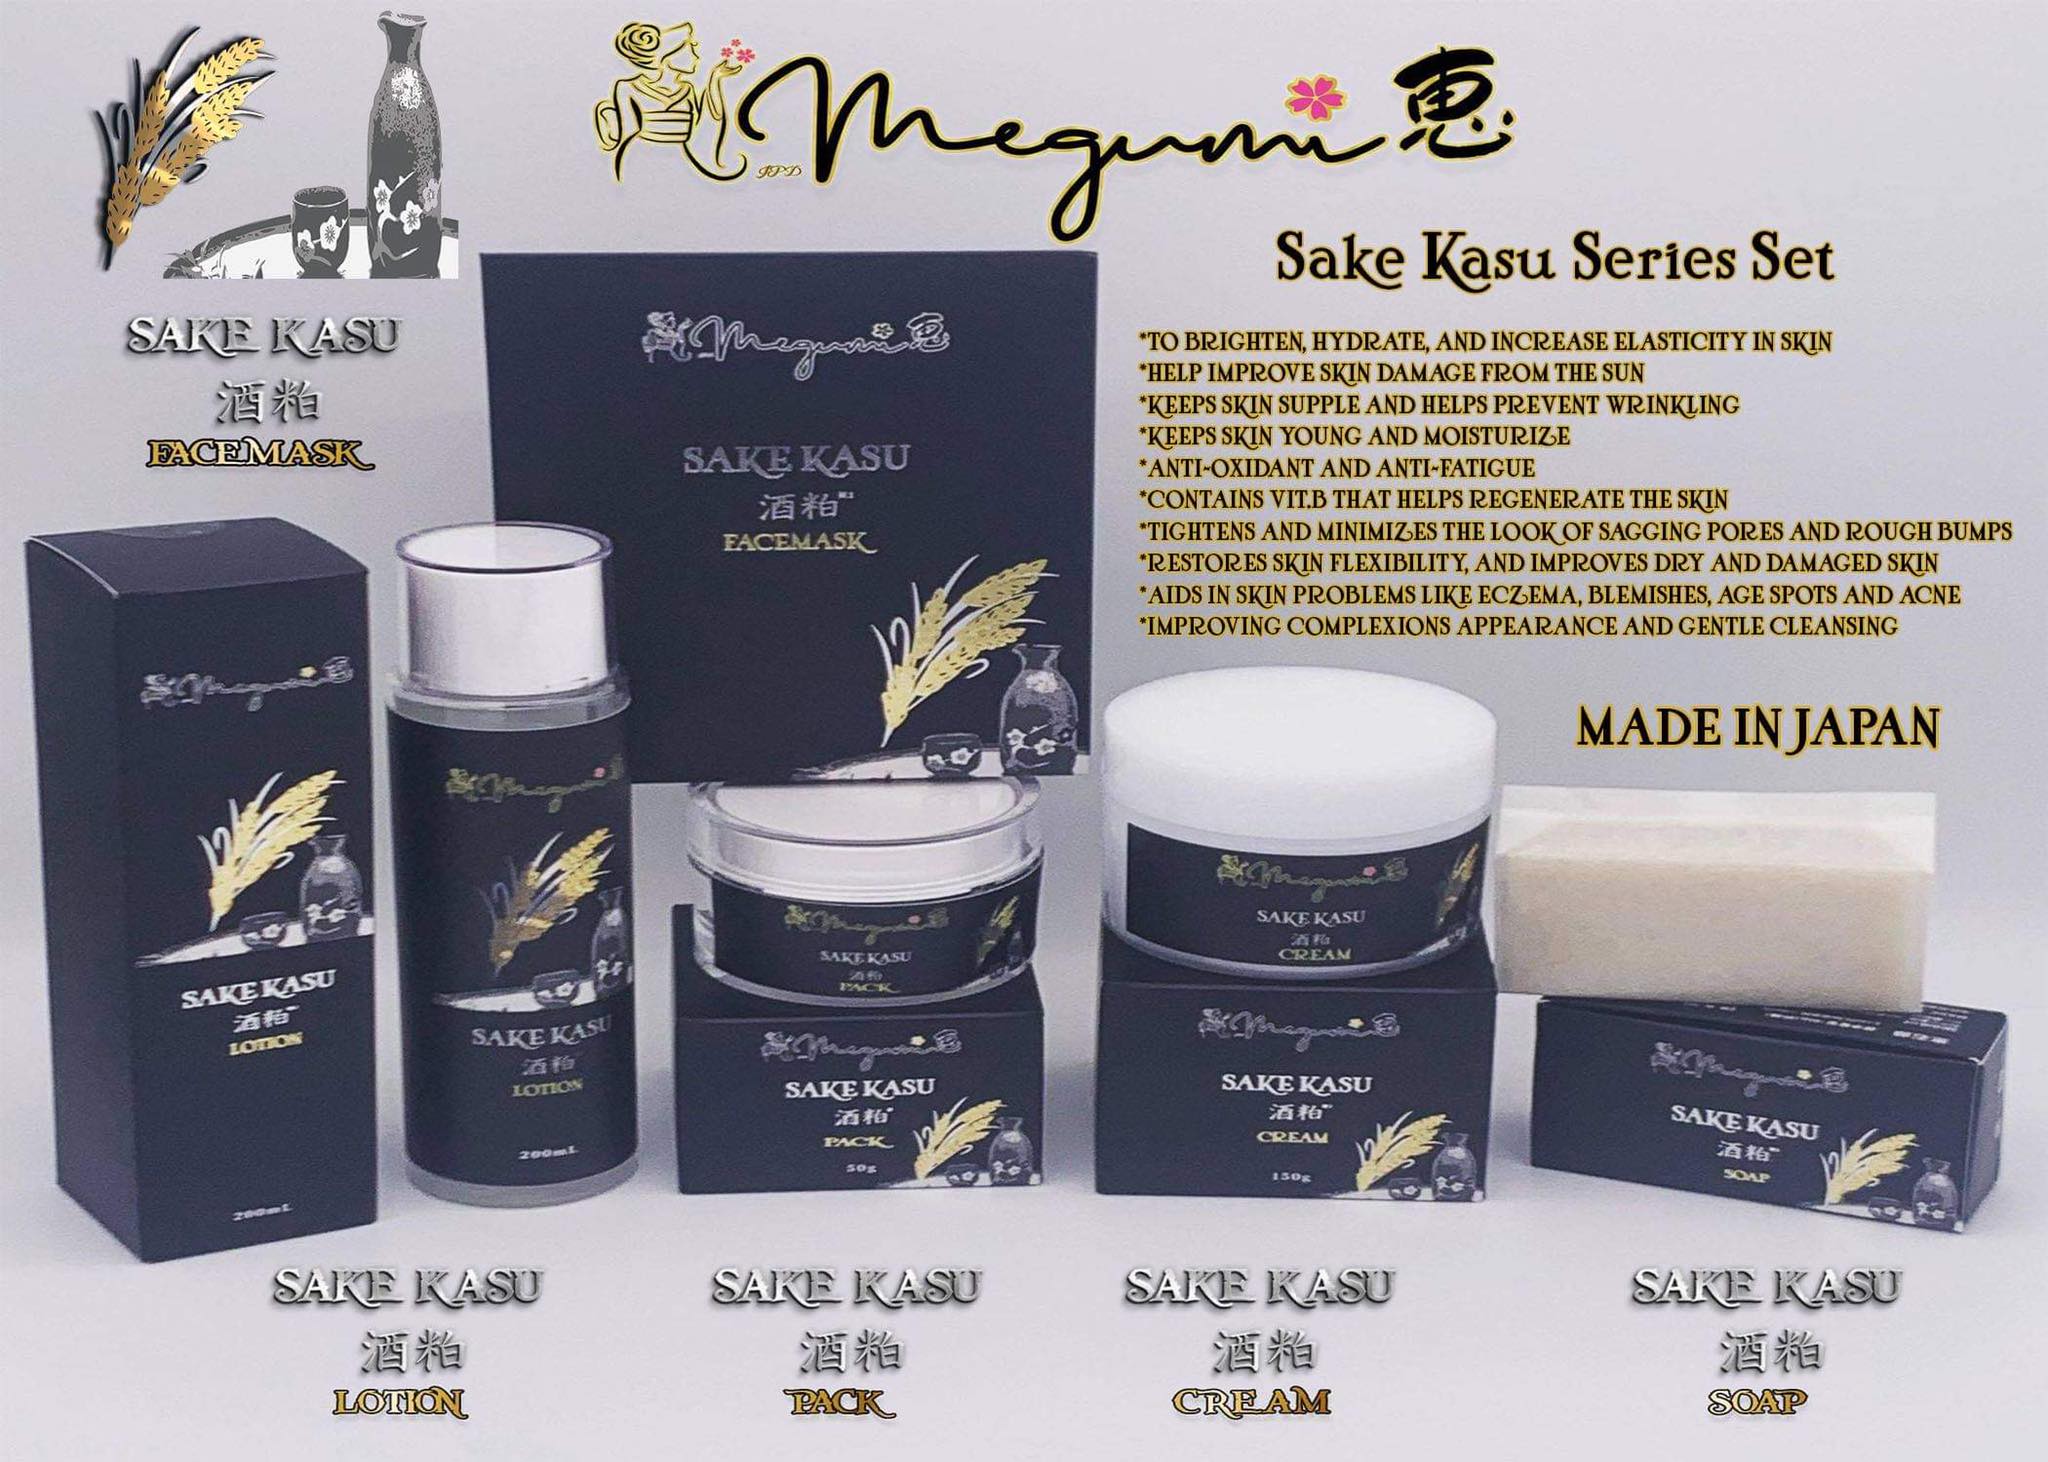 Sake Kasu Set and 3 Megumi Supplements – Megumi-JPD